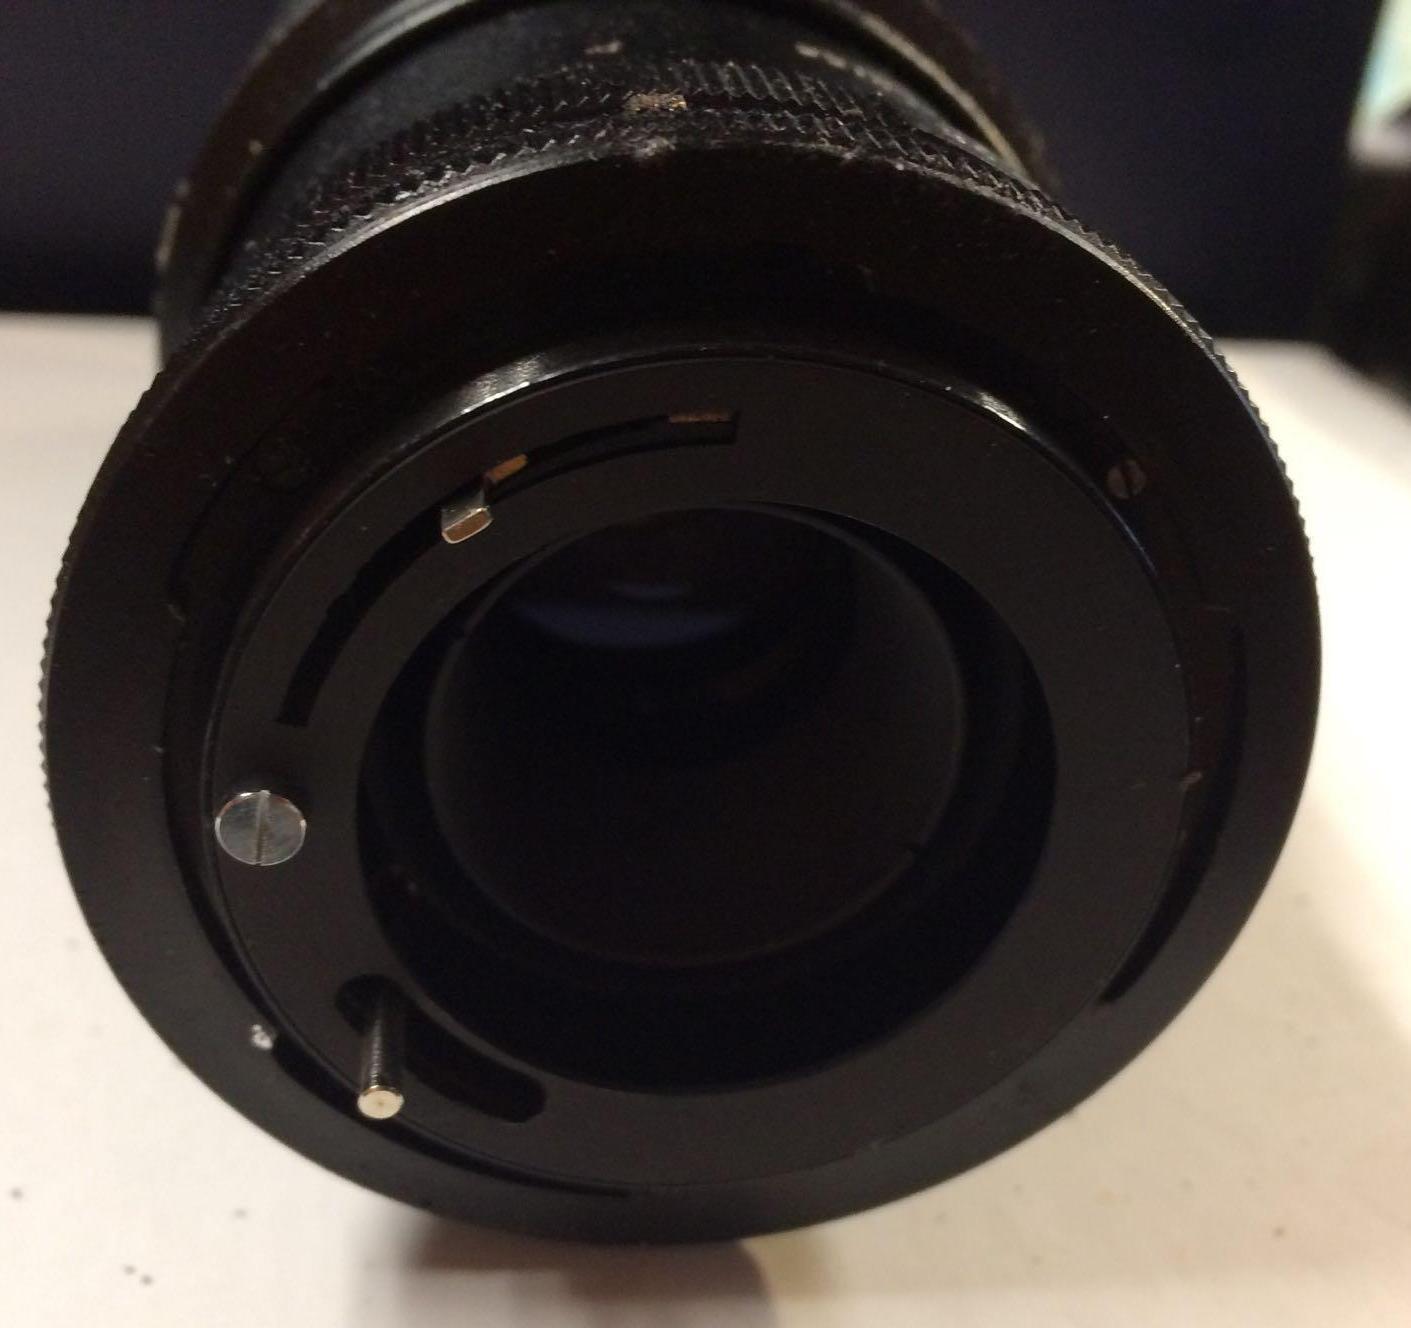 Lot of 3 Canon Mount lenses 28mm, 28-85mm, 85-200mm